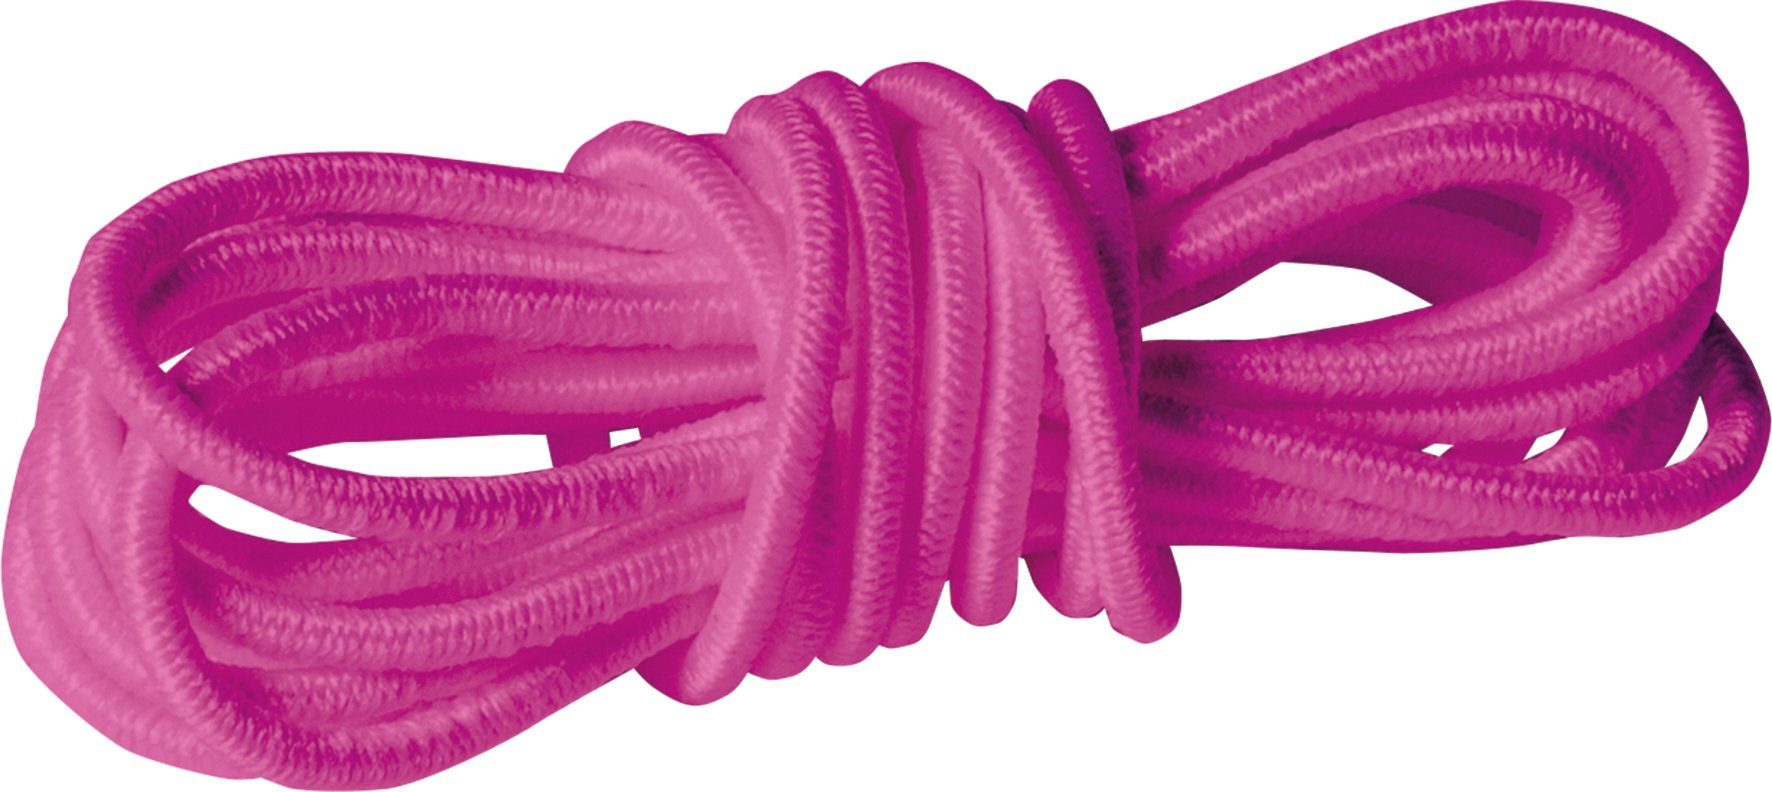 Knorr Prandell Schnuller Schnullerketten lang Pink Elastikkordel 1,5 m Band